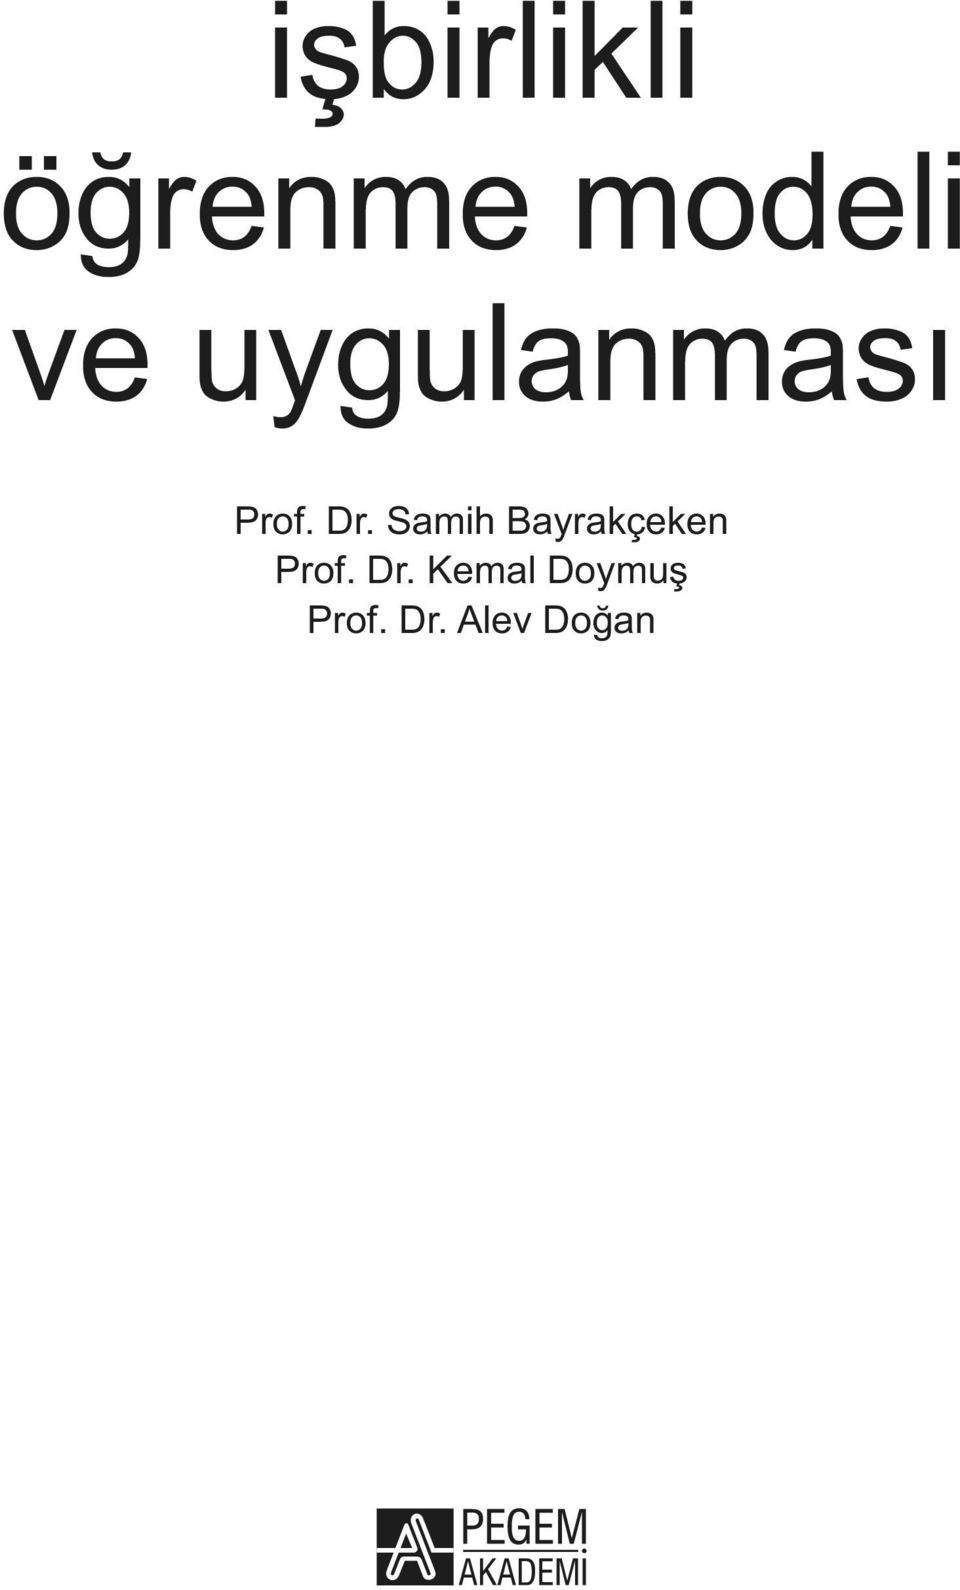 Samih Bayrakçeken Prof. Dr.